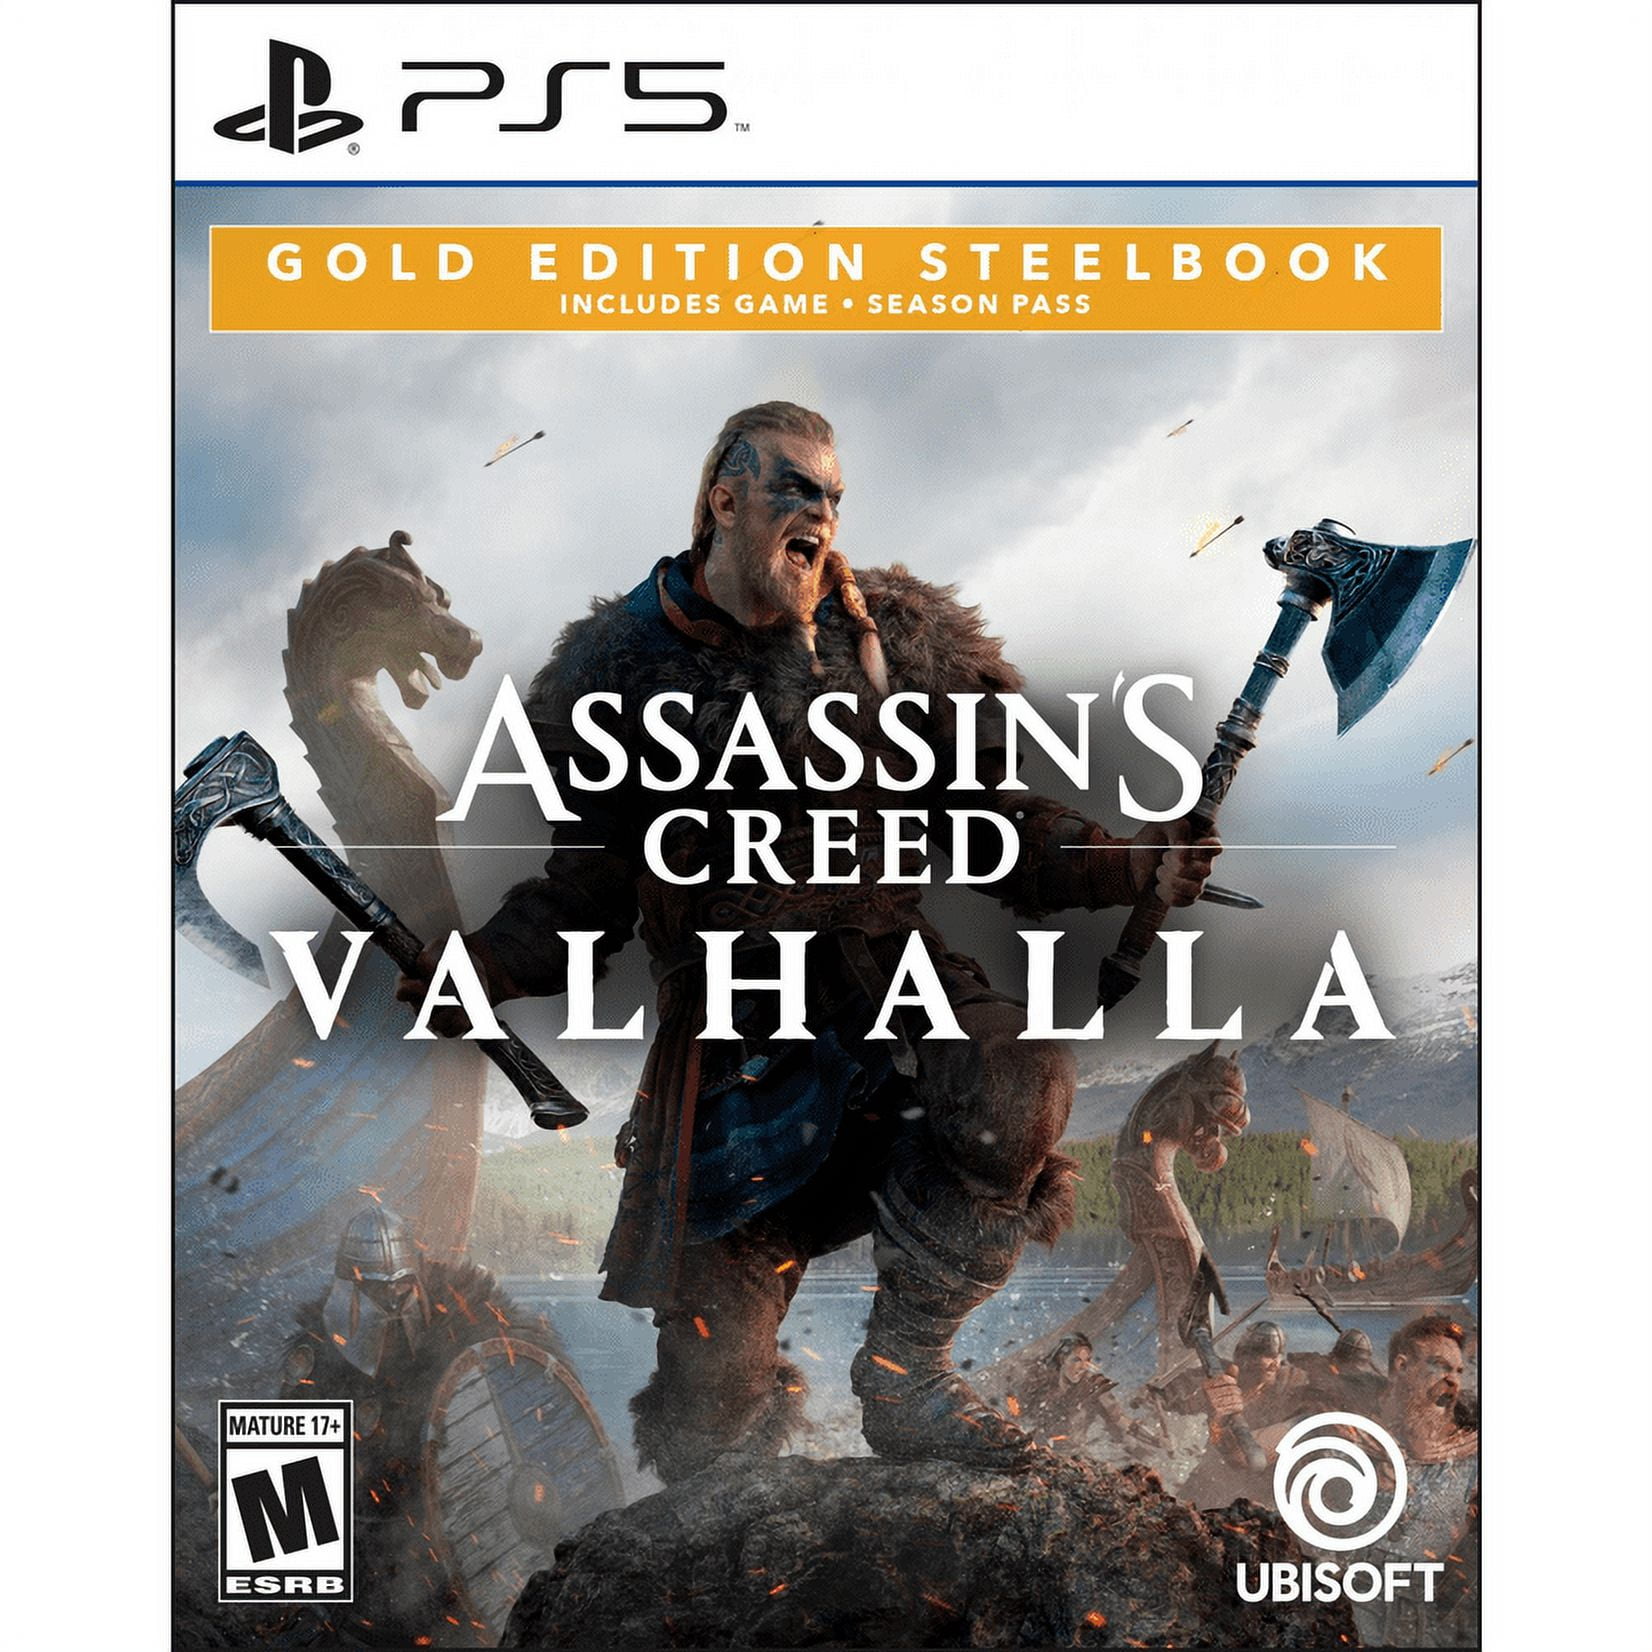 Assassin's Creed Valhalla — Season Pass on PS5 PS4 — price history